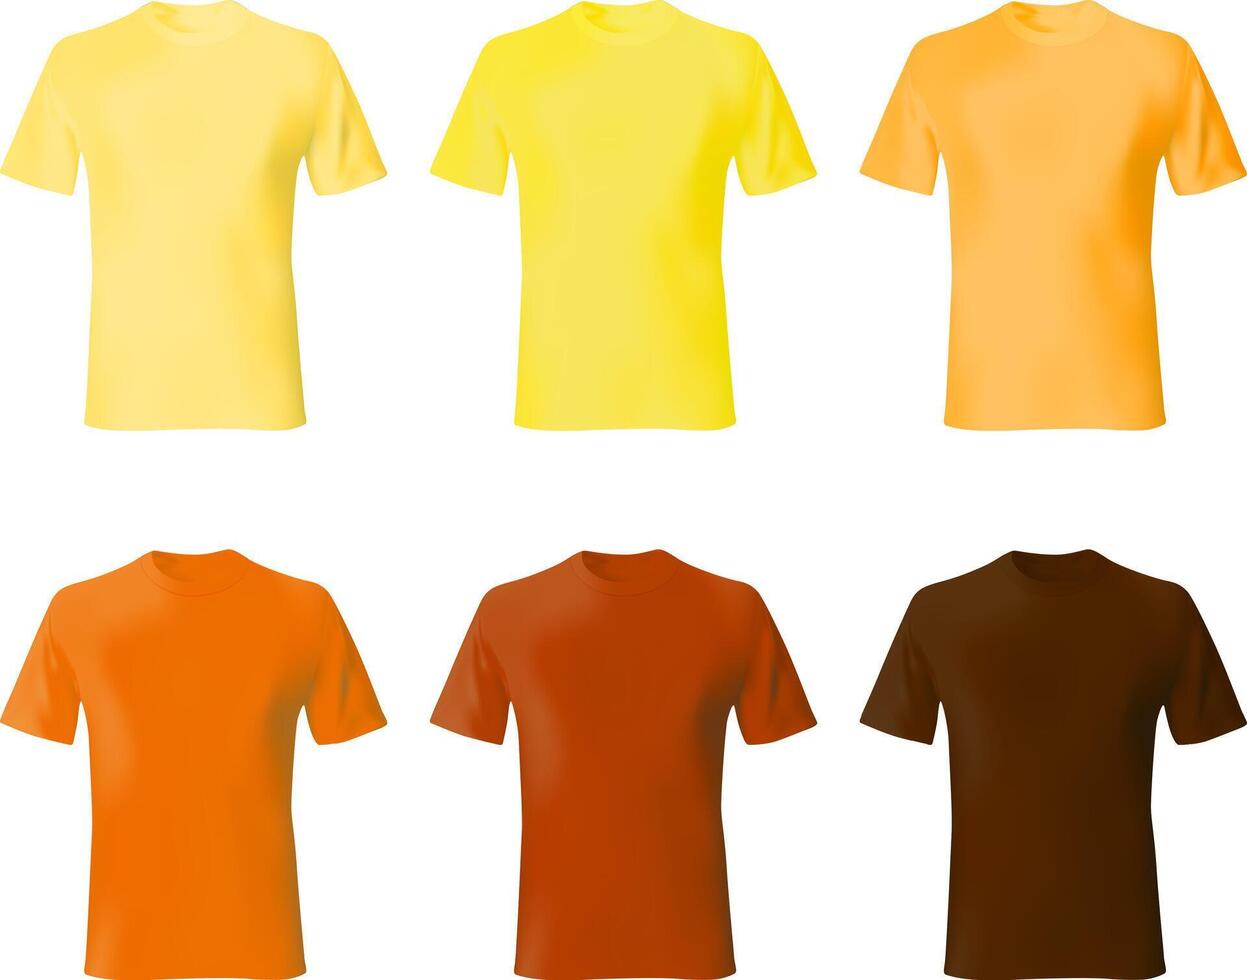 camisa Projeto modelo. conjunto homens t camisa amarelo, laranja, Castanho cor. realista brincar camisas modelo masculino moda. vetor